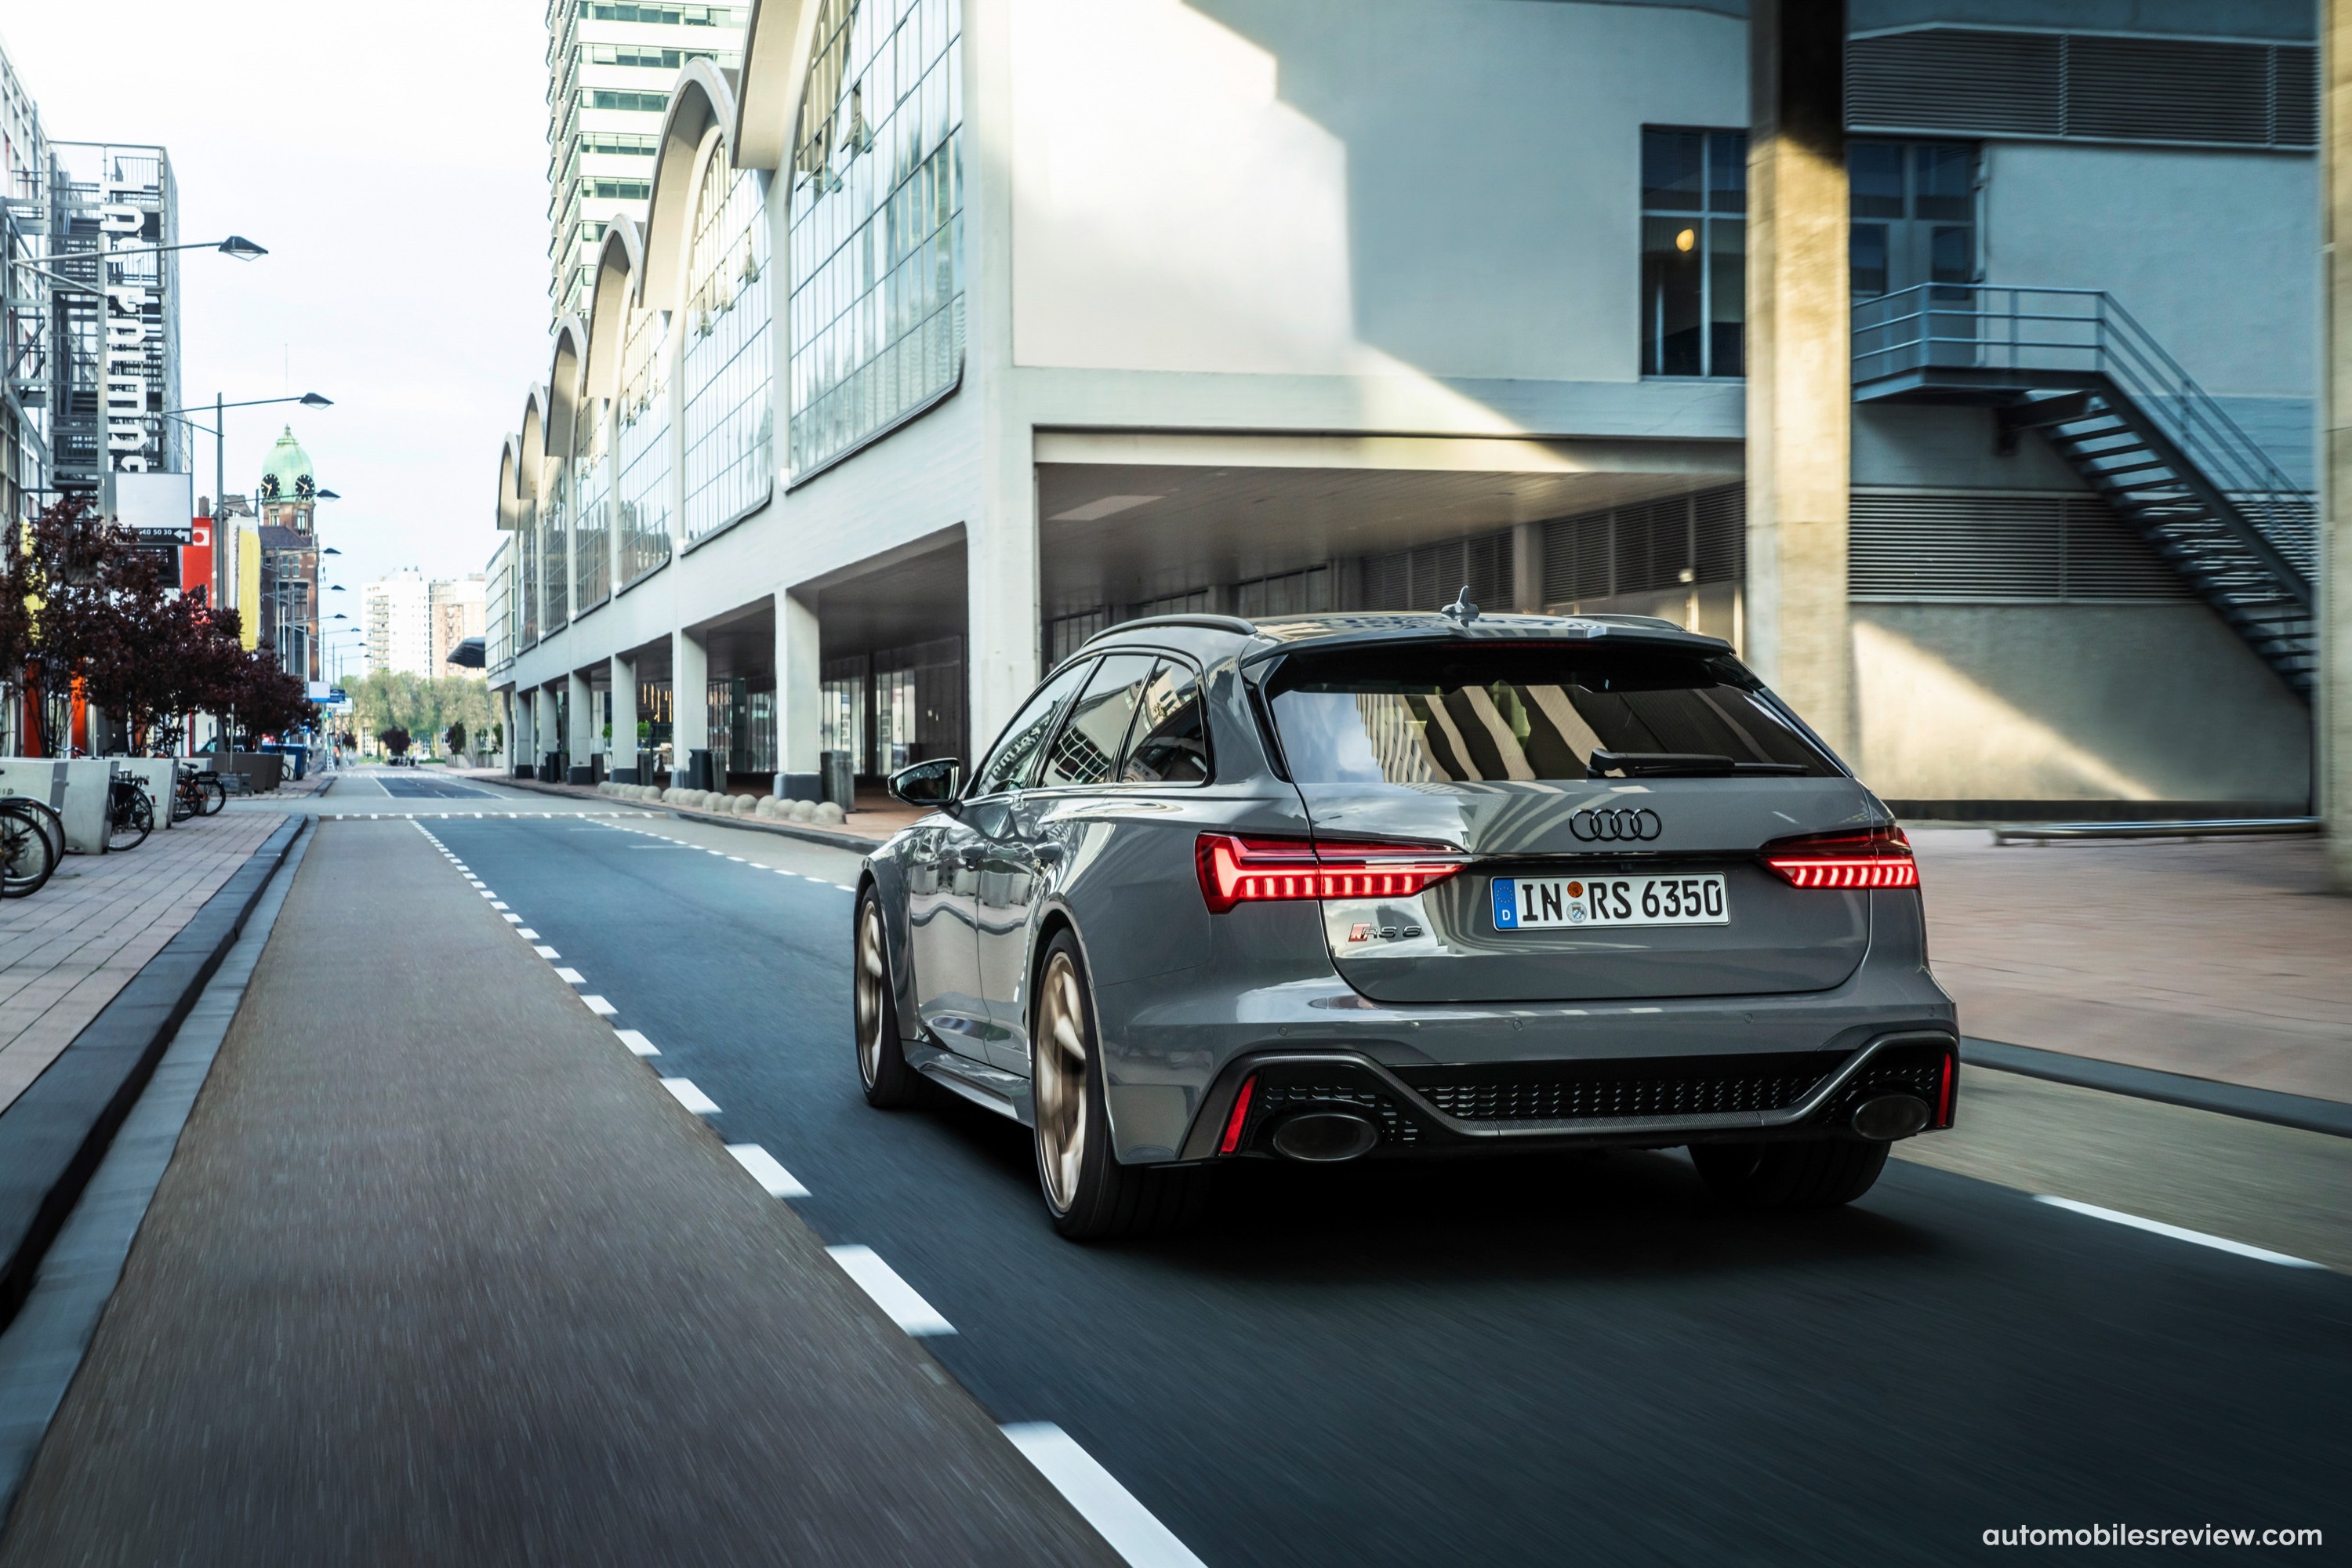 Audi RS6 Avant performance